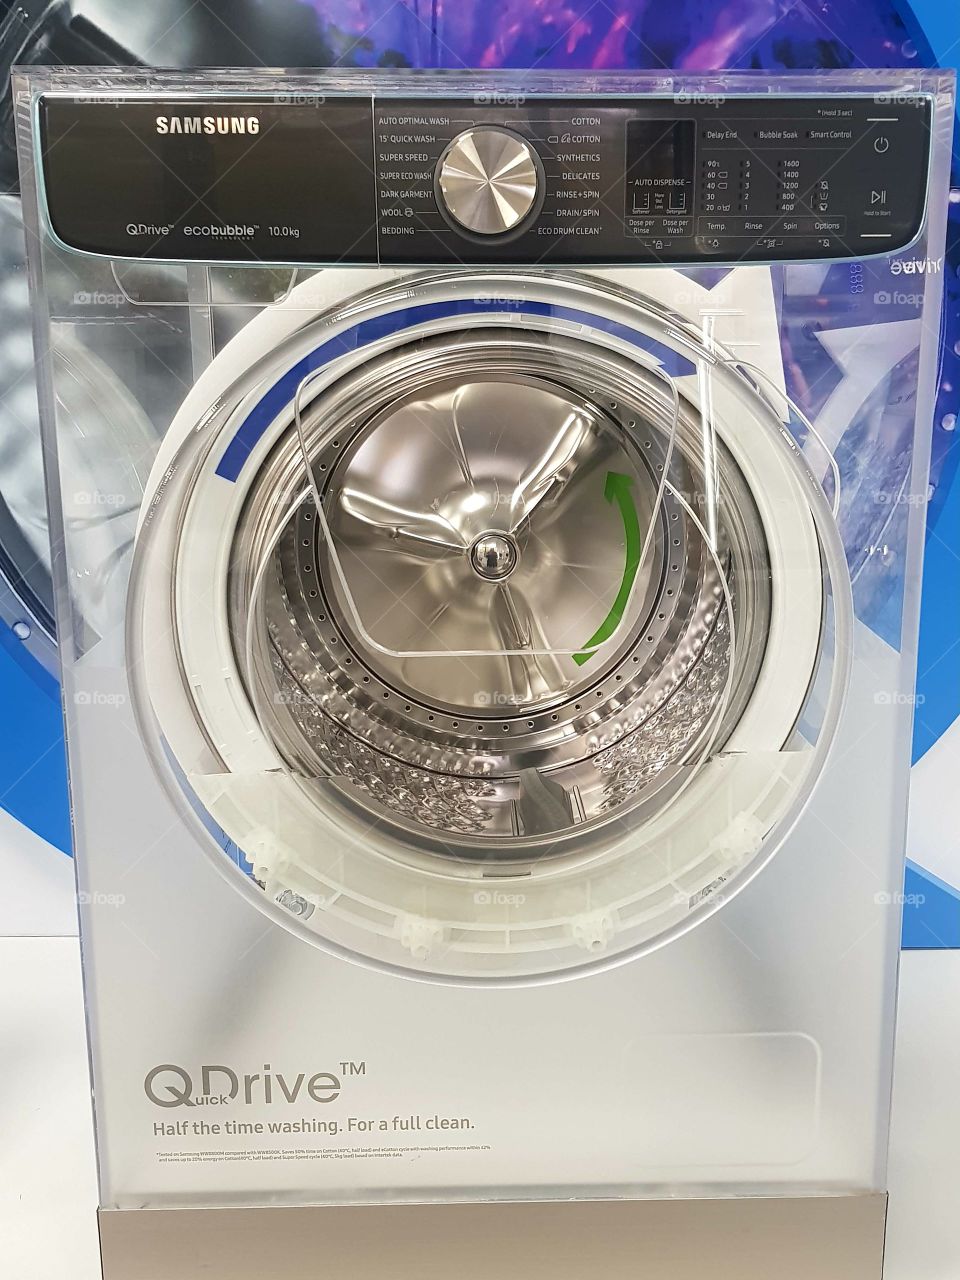 Samsung Quick drive washing machine and electronic equipment white goods